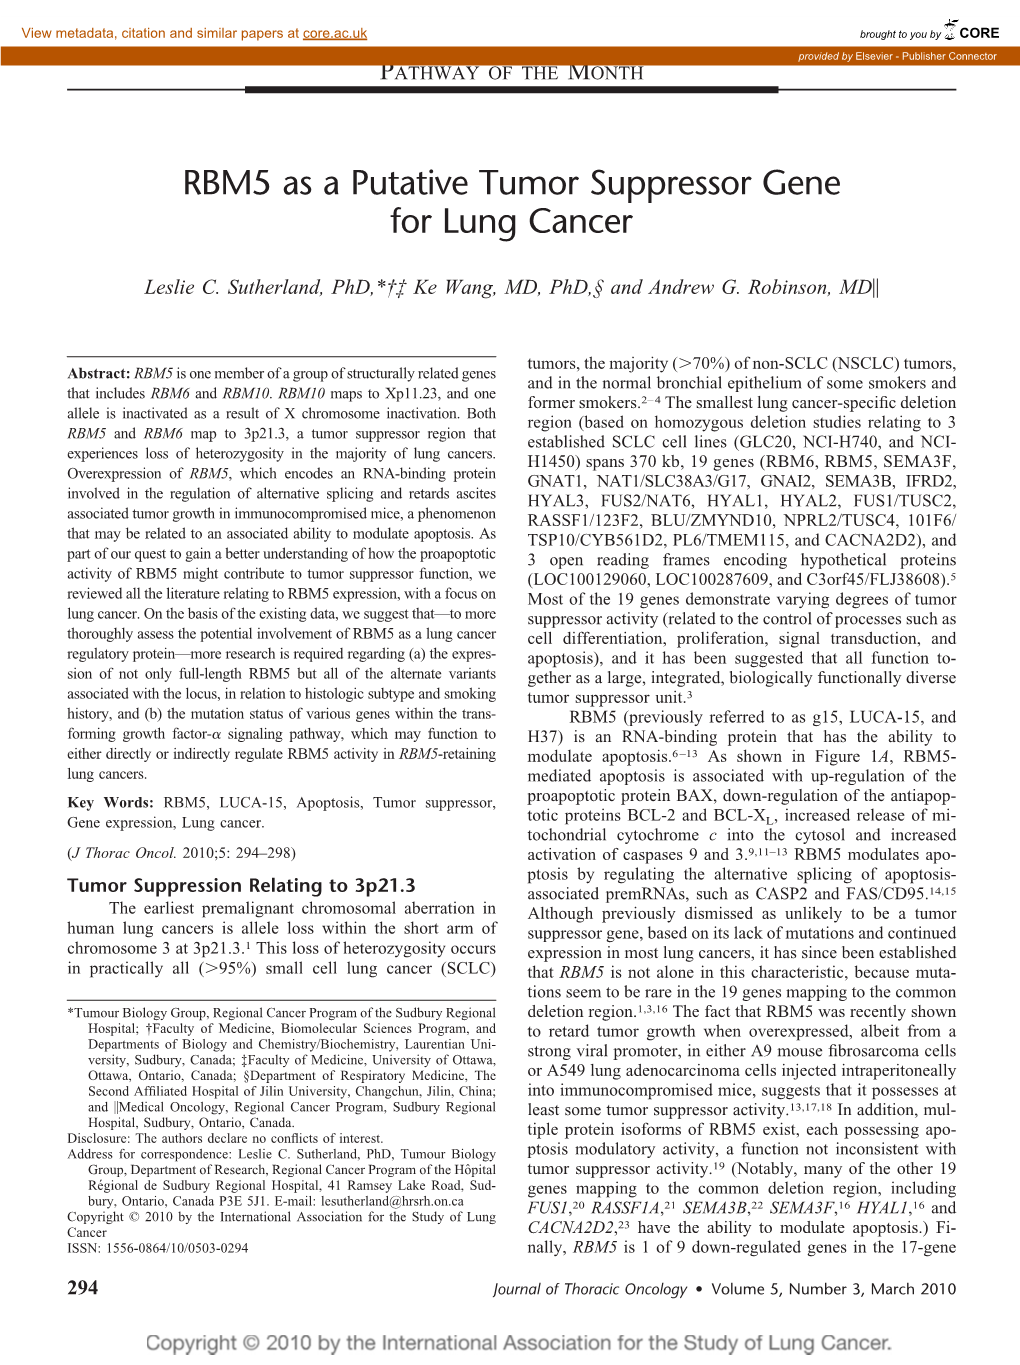 RBM5 As a Putative Tumor Suppressor Gene for Lung Cancer